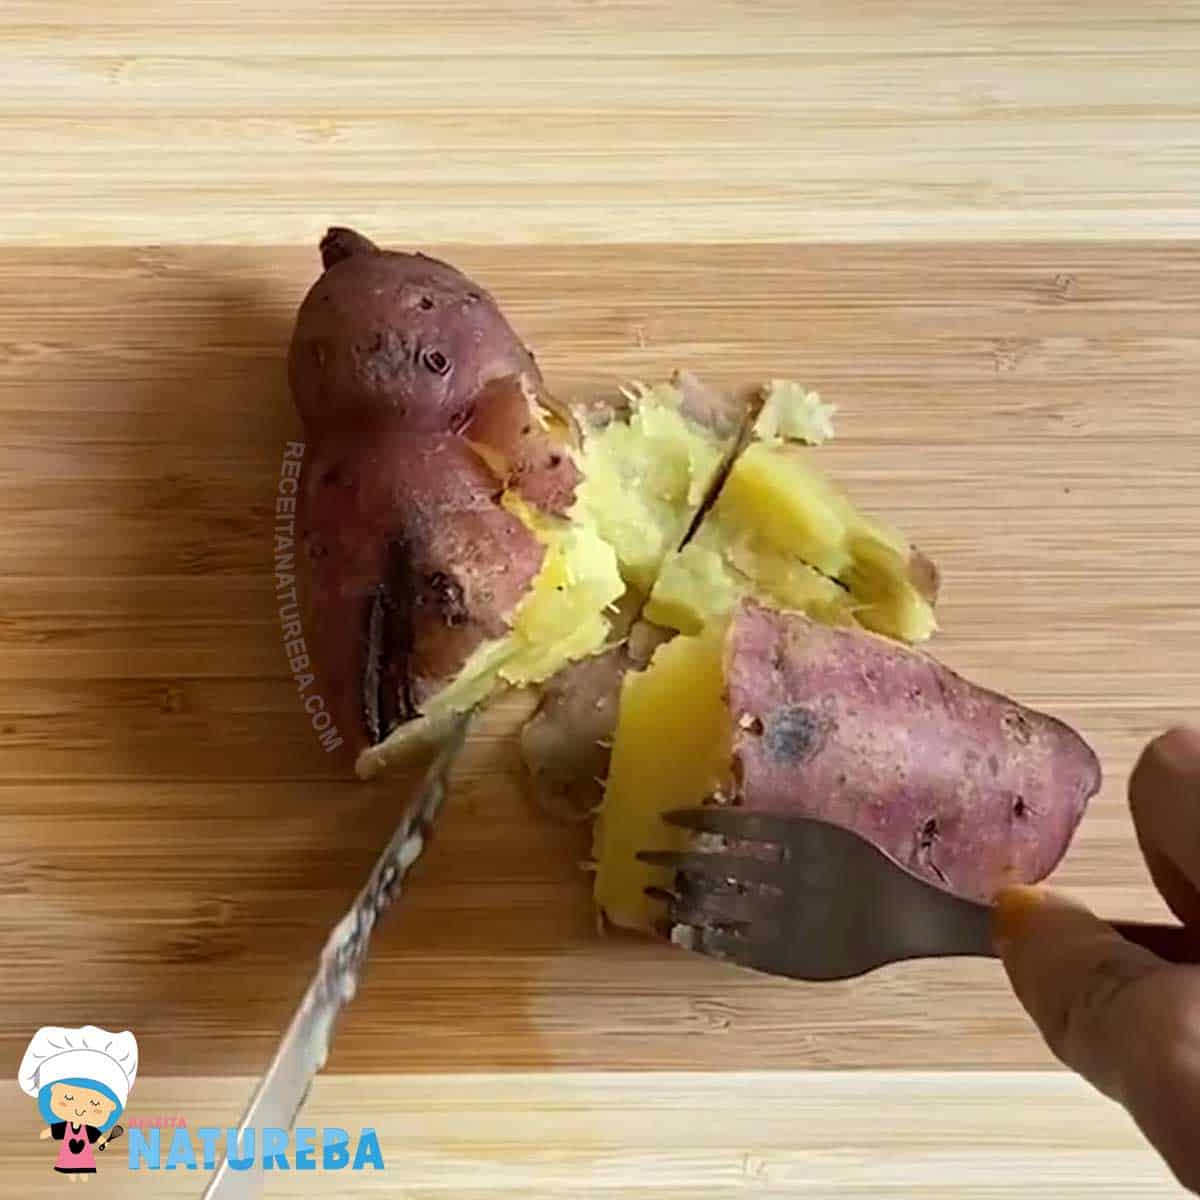 cortando a batata doce cozida